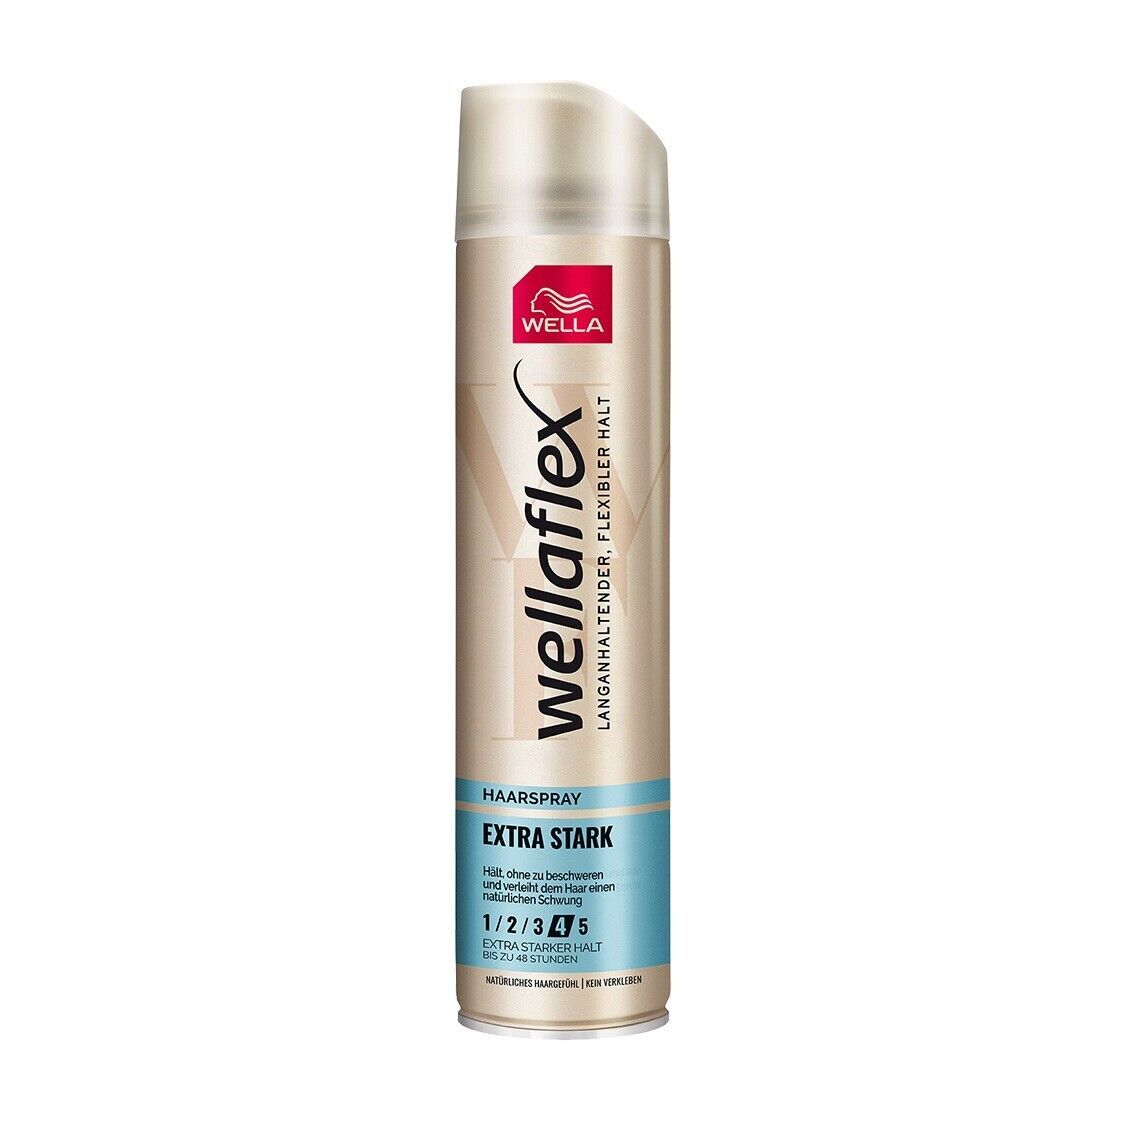 Wella Wellaflex EXTRA STRONG Hair spray -Level #4-200ml-FREE SHIP-CrAcKeD CAP - $11.99